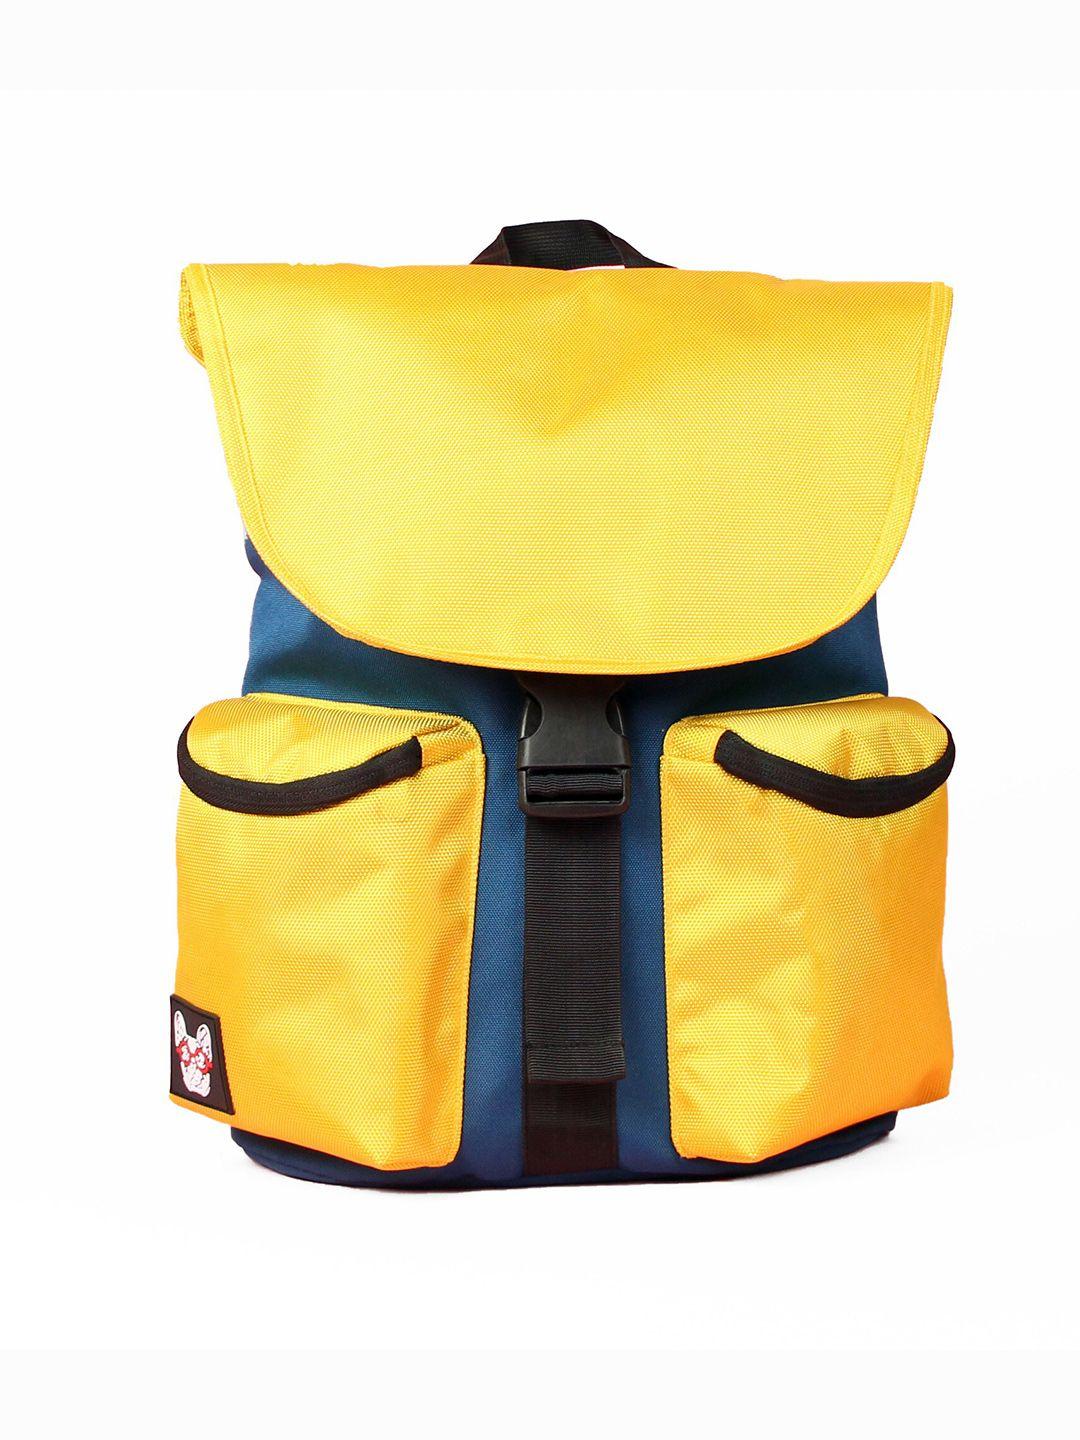 madbrag colourblocked backpack